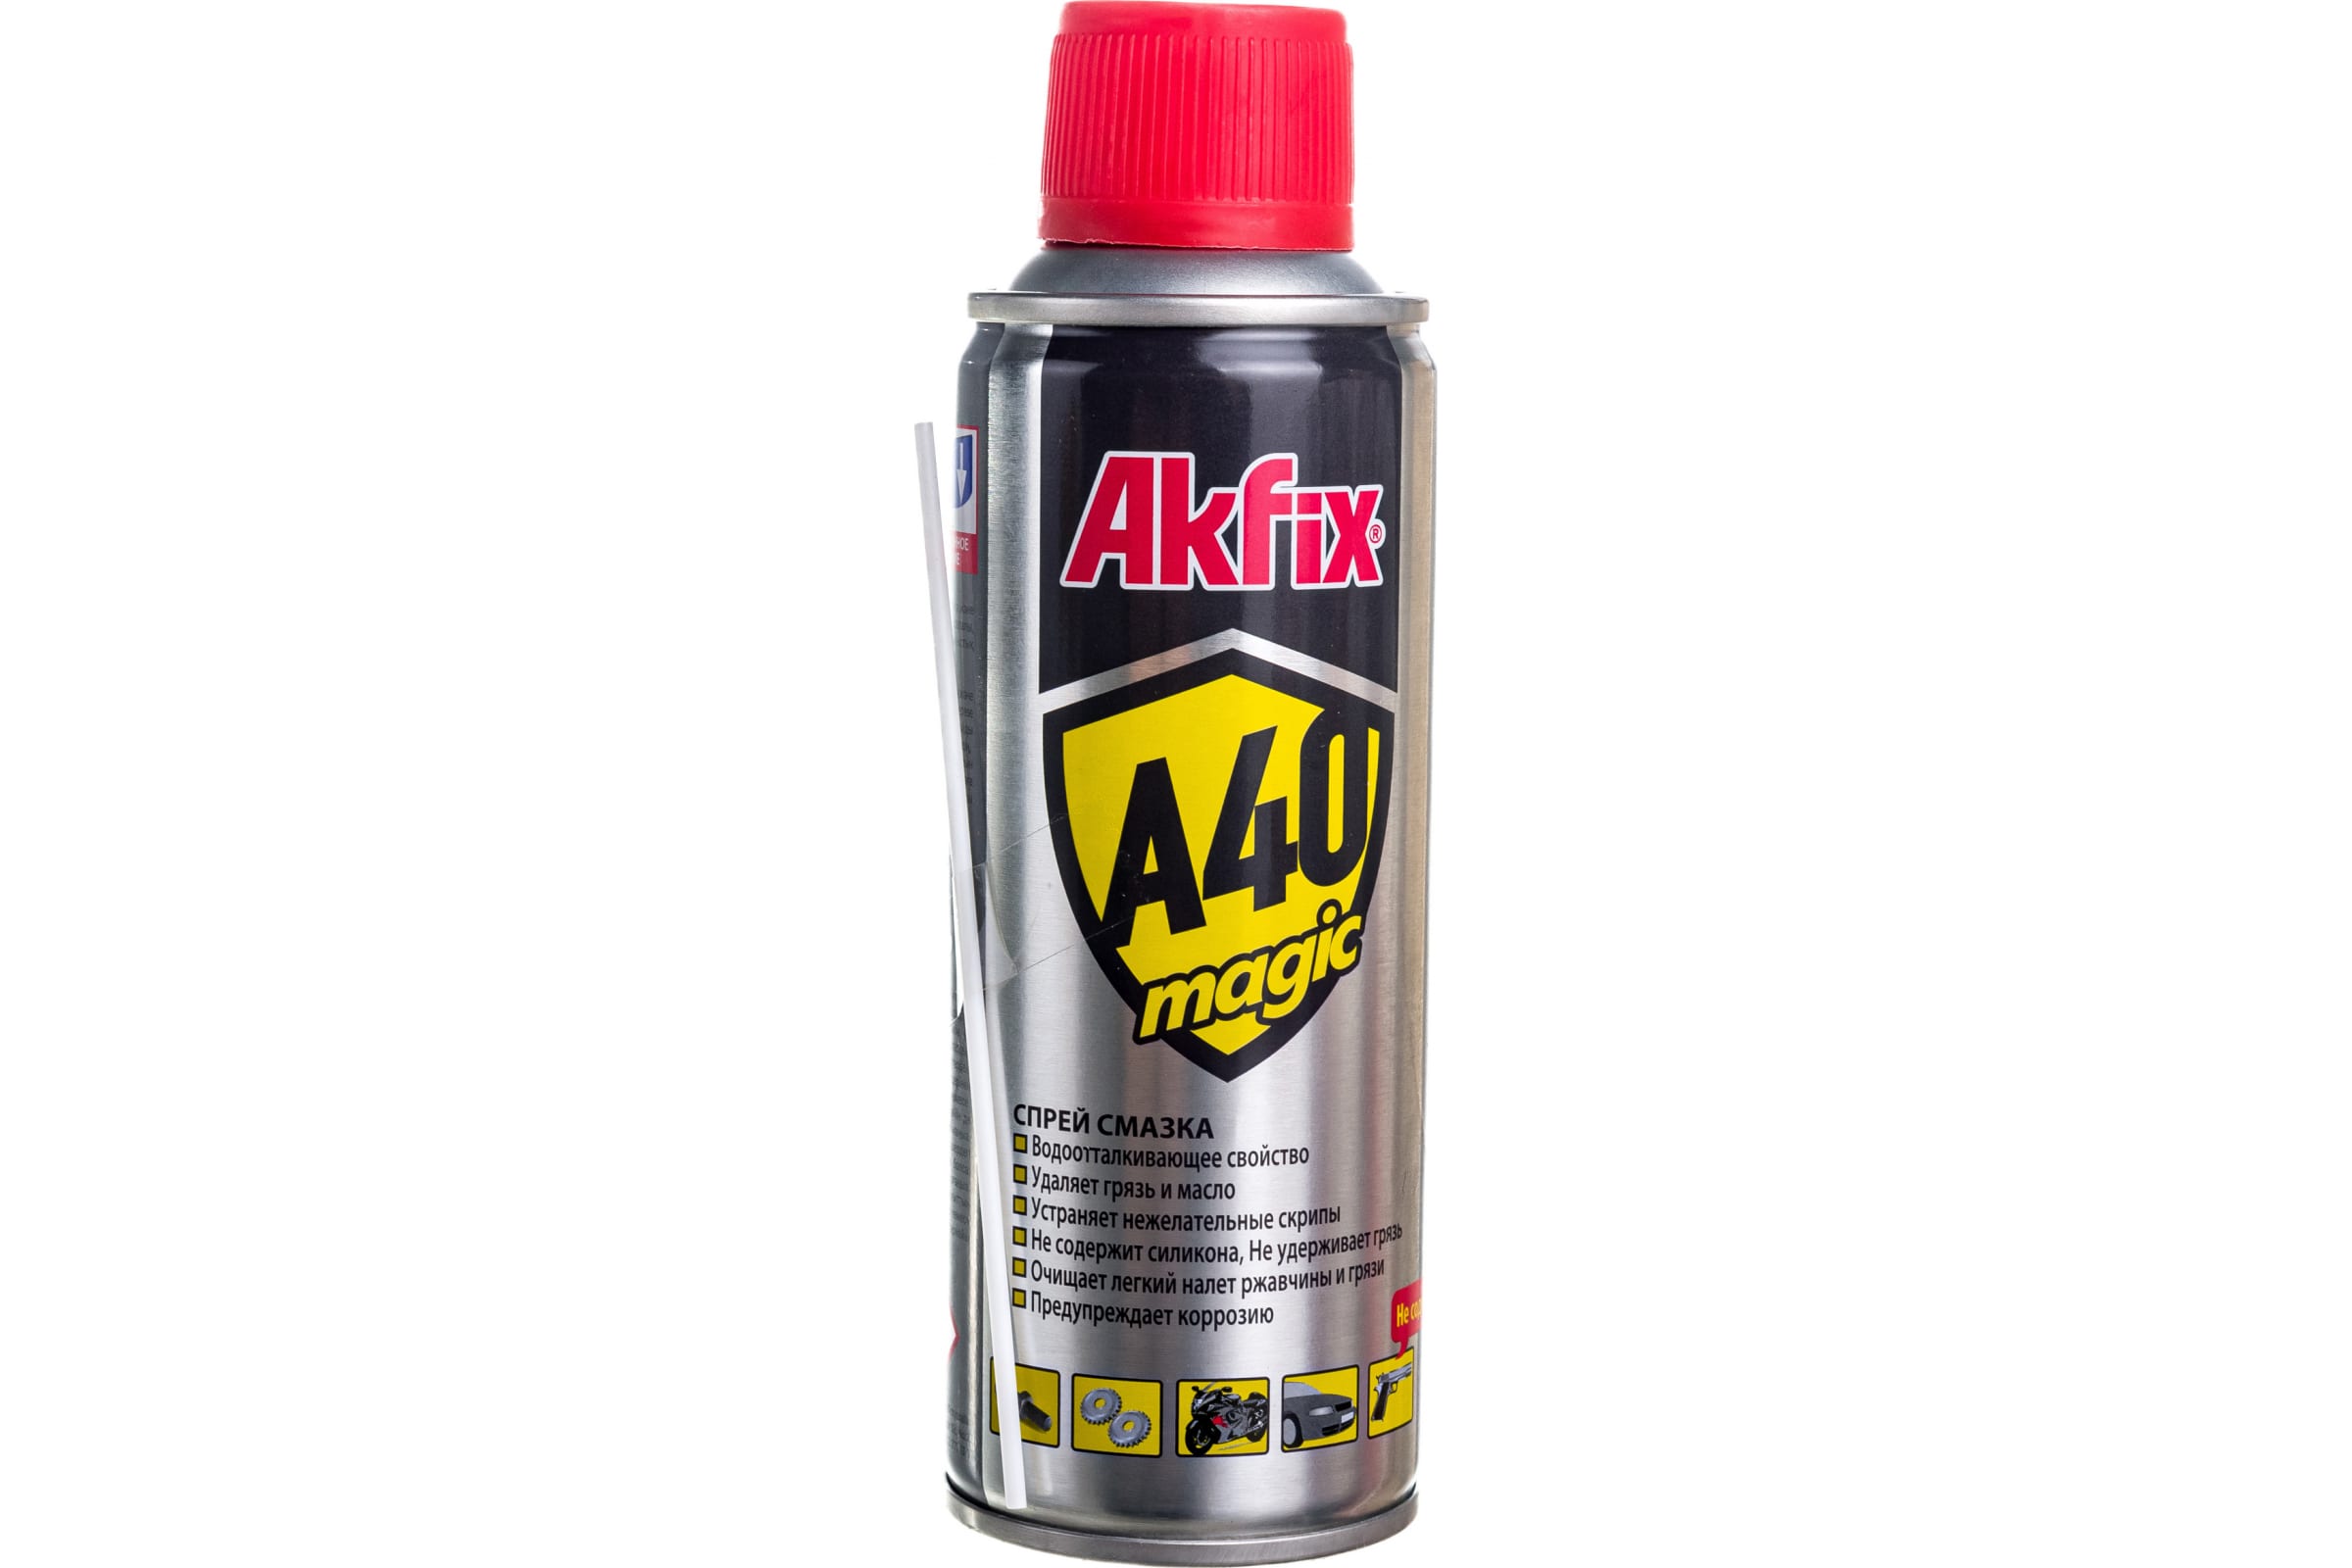 Akfix Универсальная смазка A40 Magic, 200 мл YA420 универсальная силиконовая смазка вмпавто